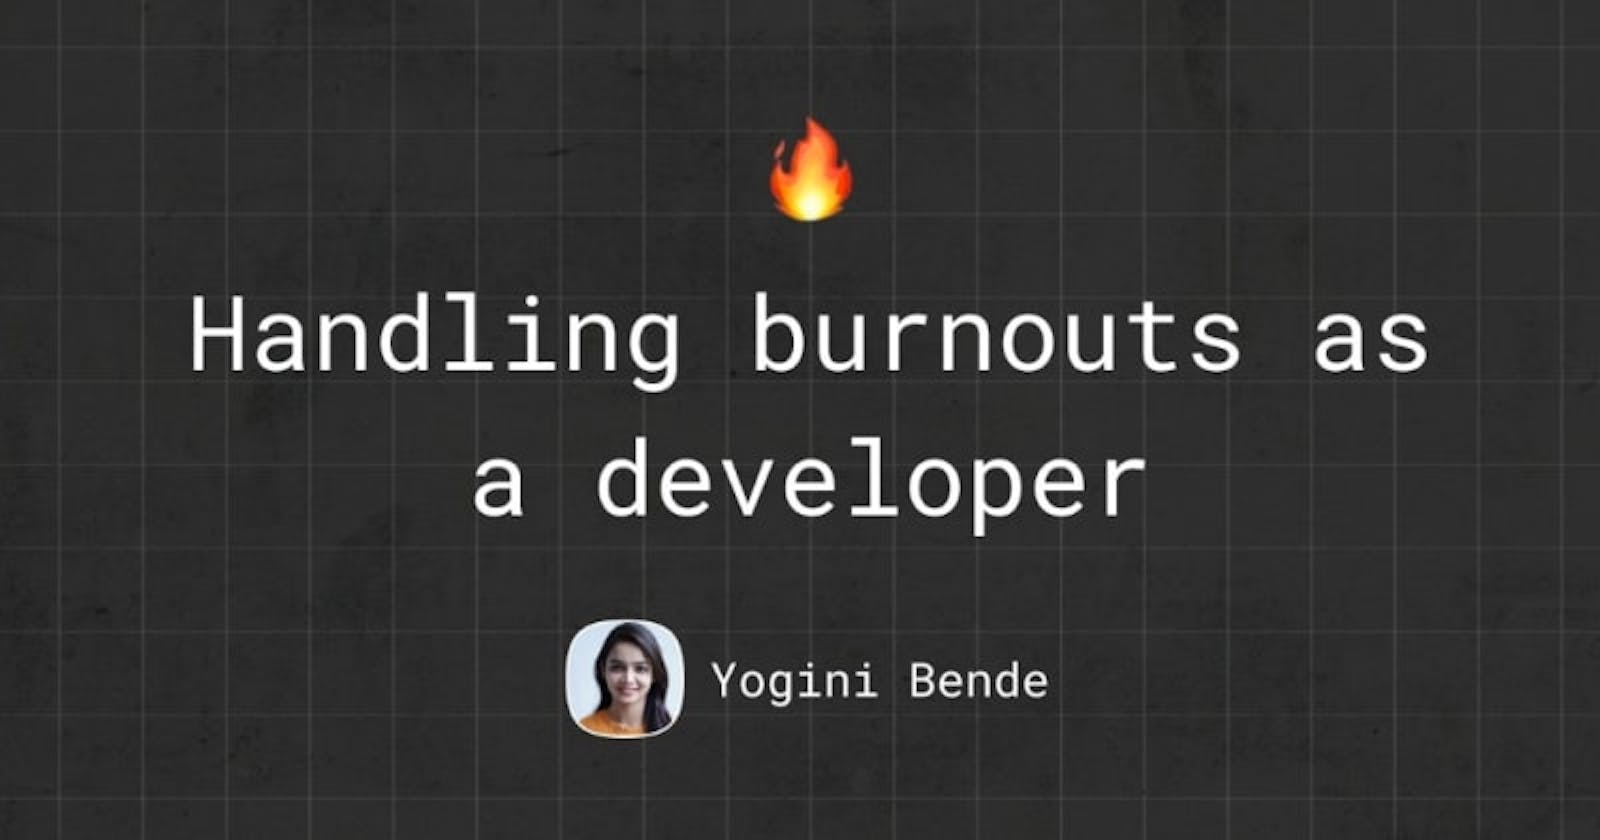 Handling burnouts as a developer!